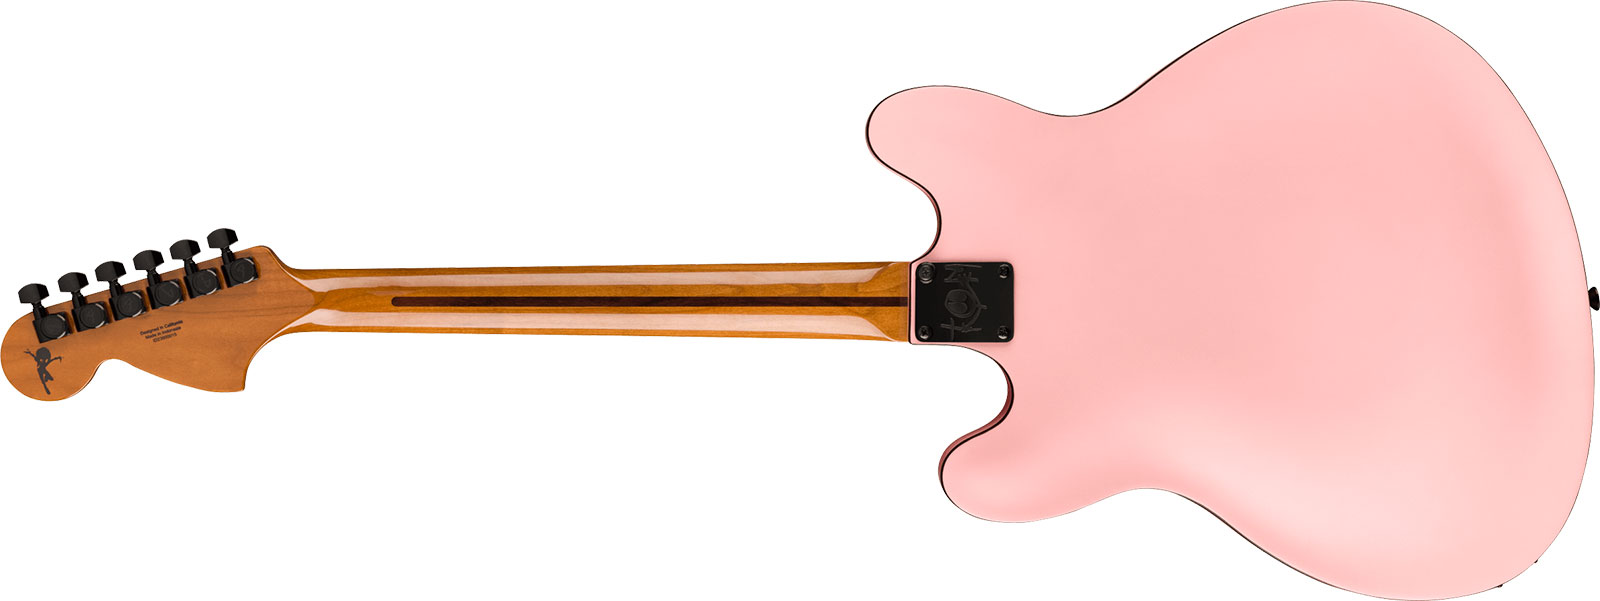 Fender Tom Delonge Starcaster Signature 1h Seymour Duncan Ht Rw - Satin Shell Pink - Guitarra eléctrica semi caja - Variation 1